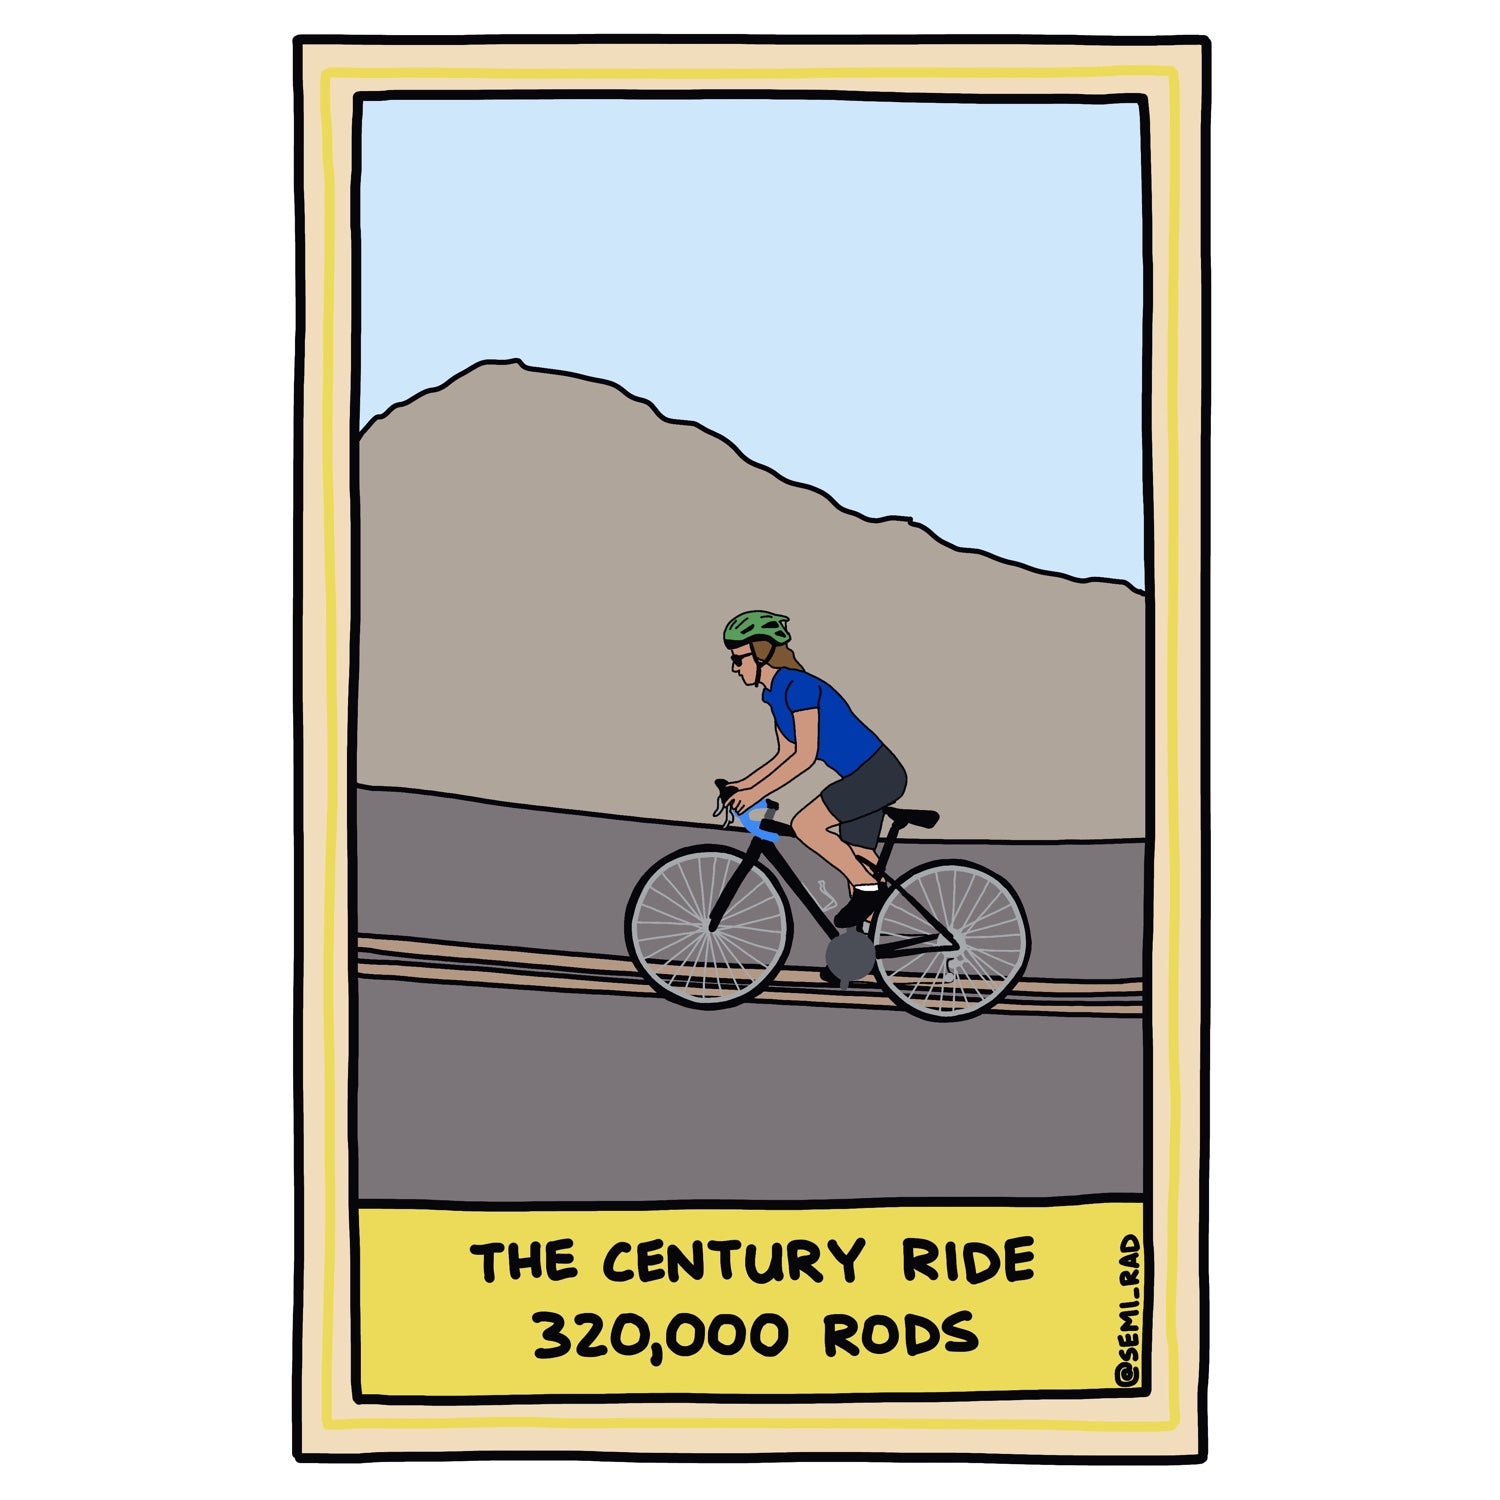 The Century Ride: 320,000 Rods